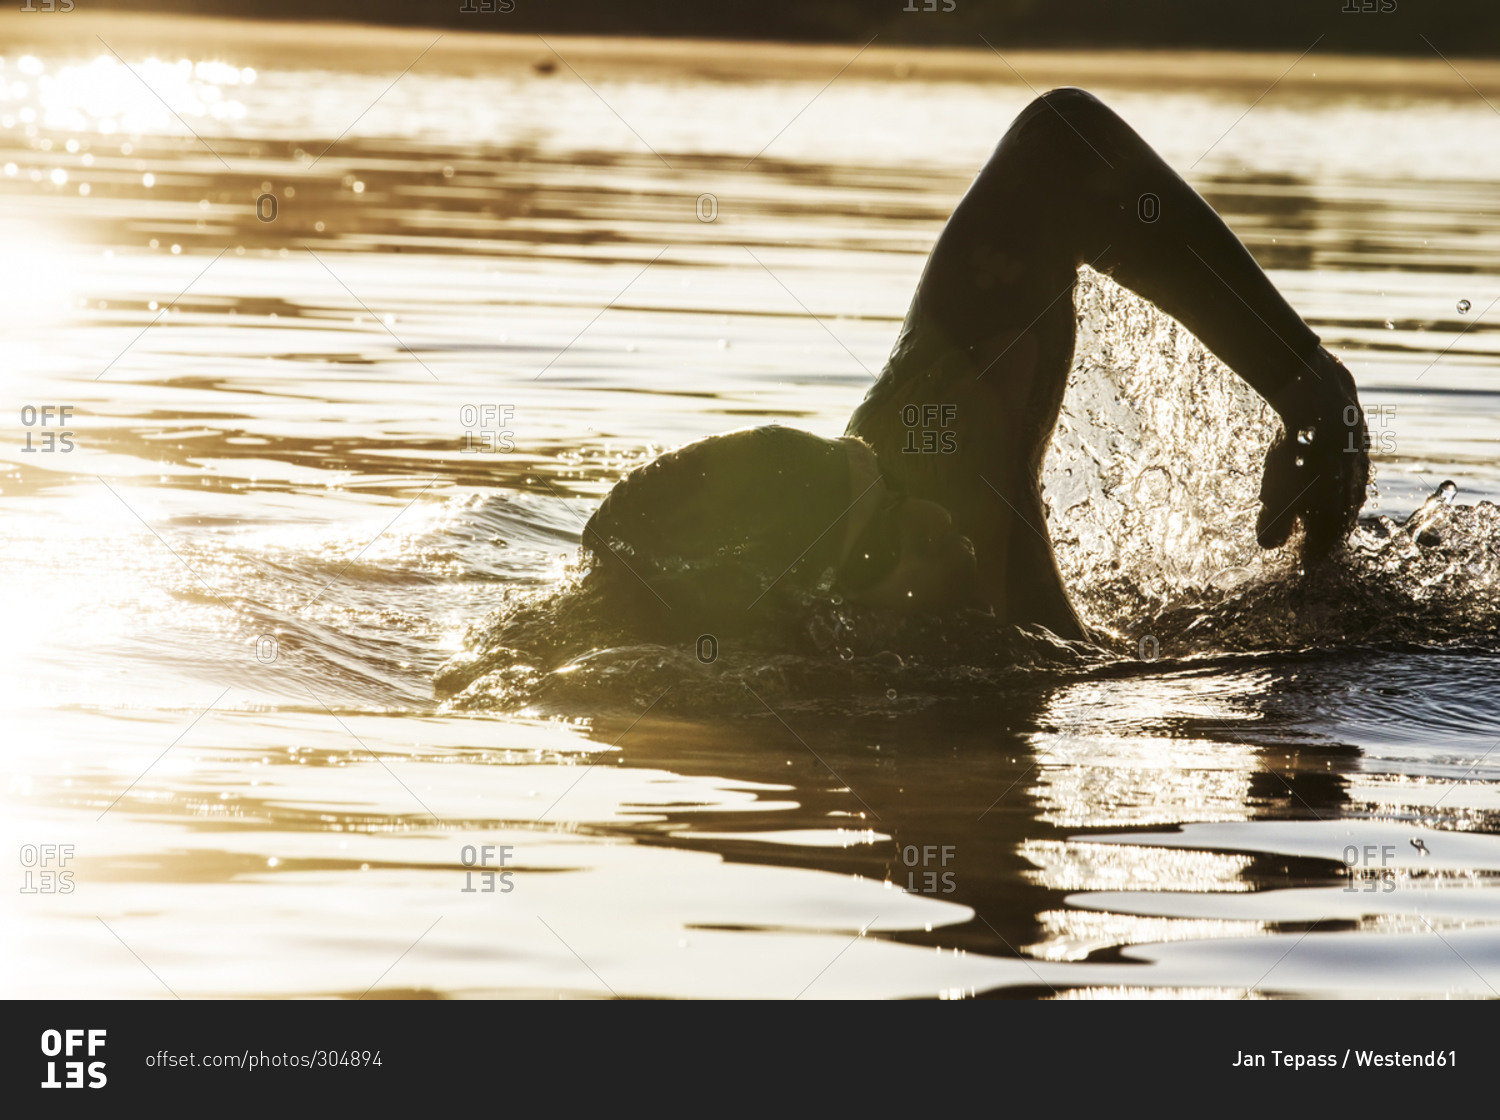 Triathlete swimming in lake